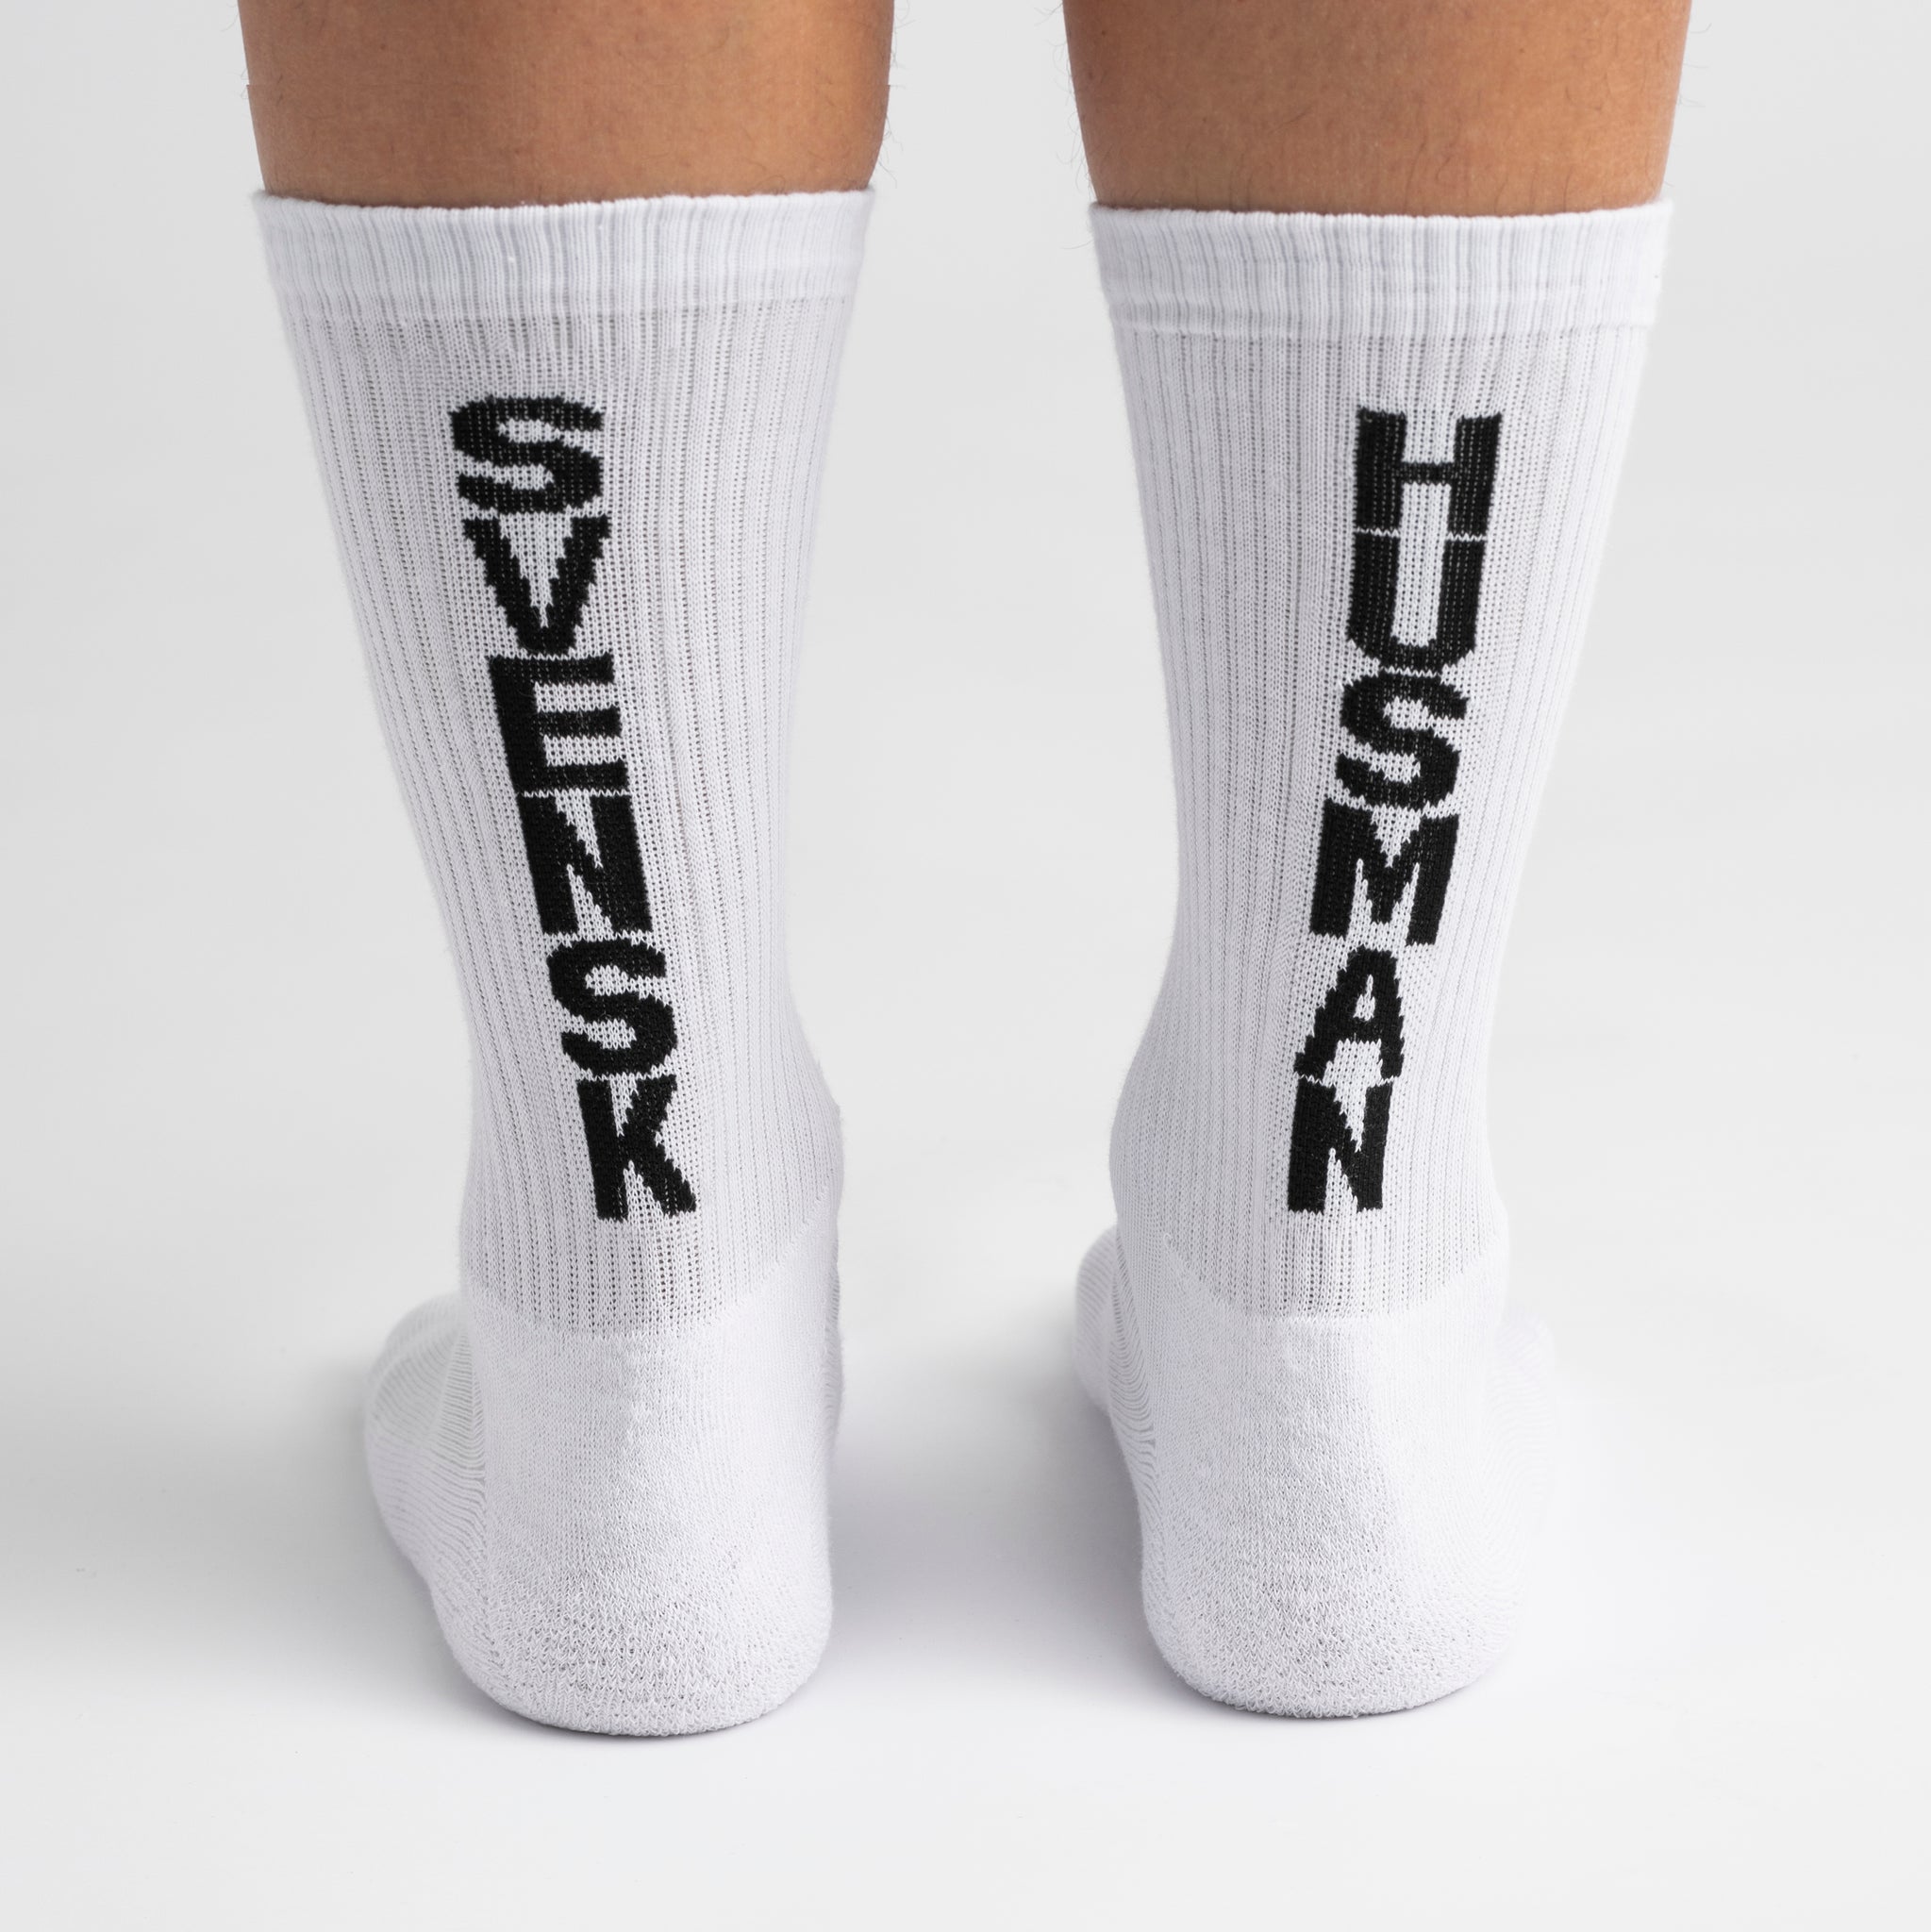 Tennis socks - Swedish Husman